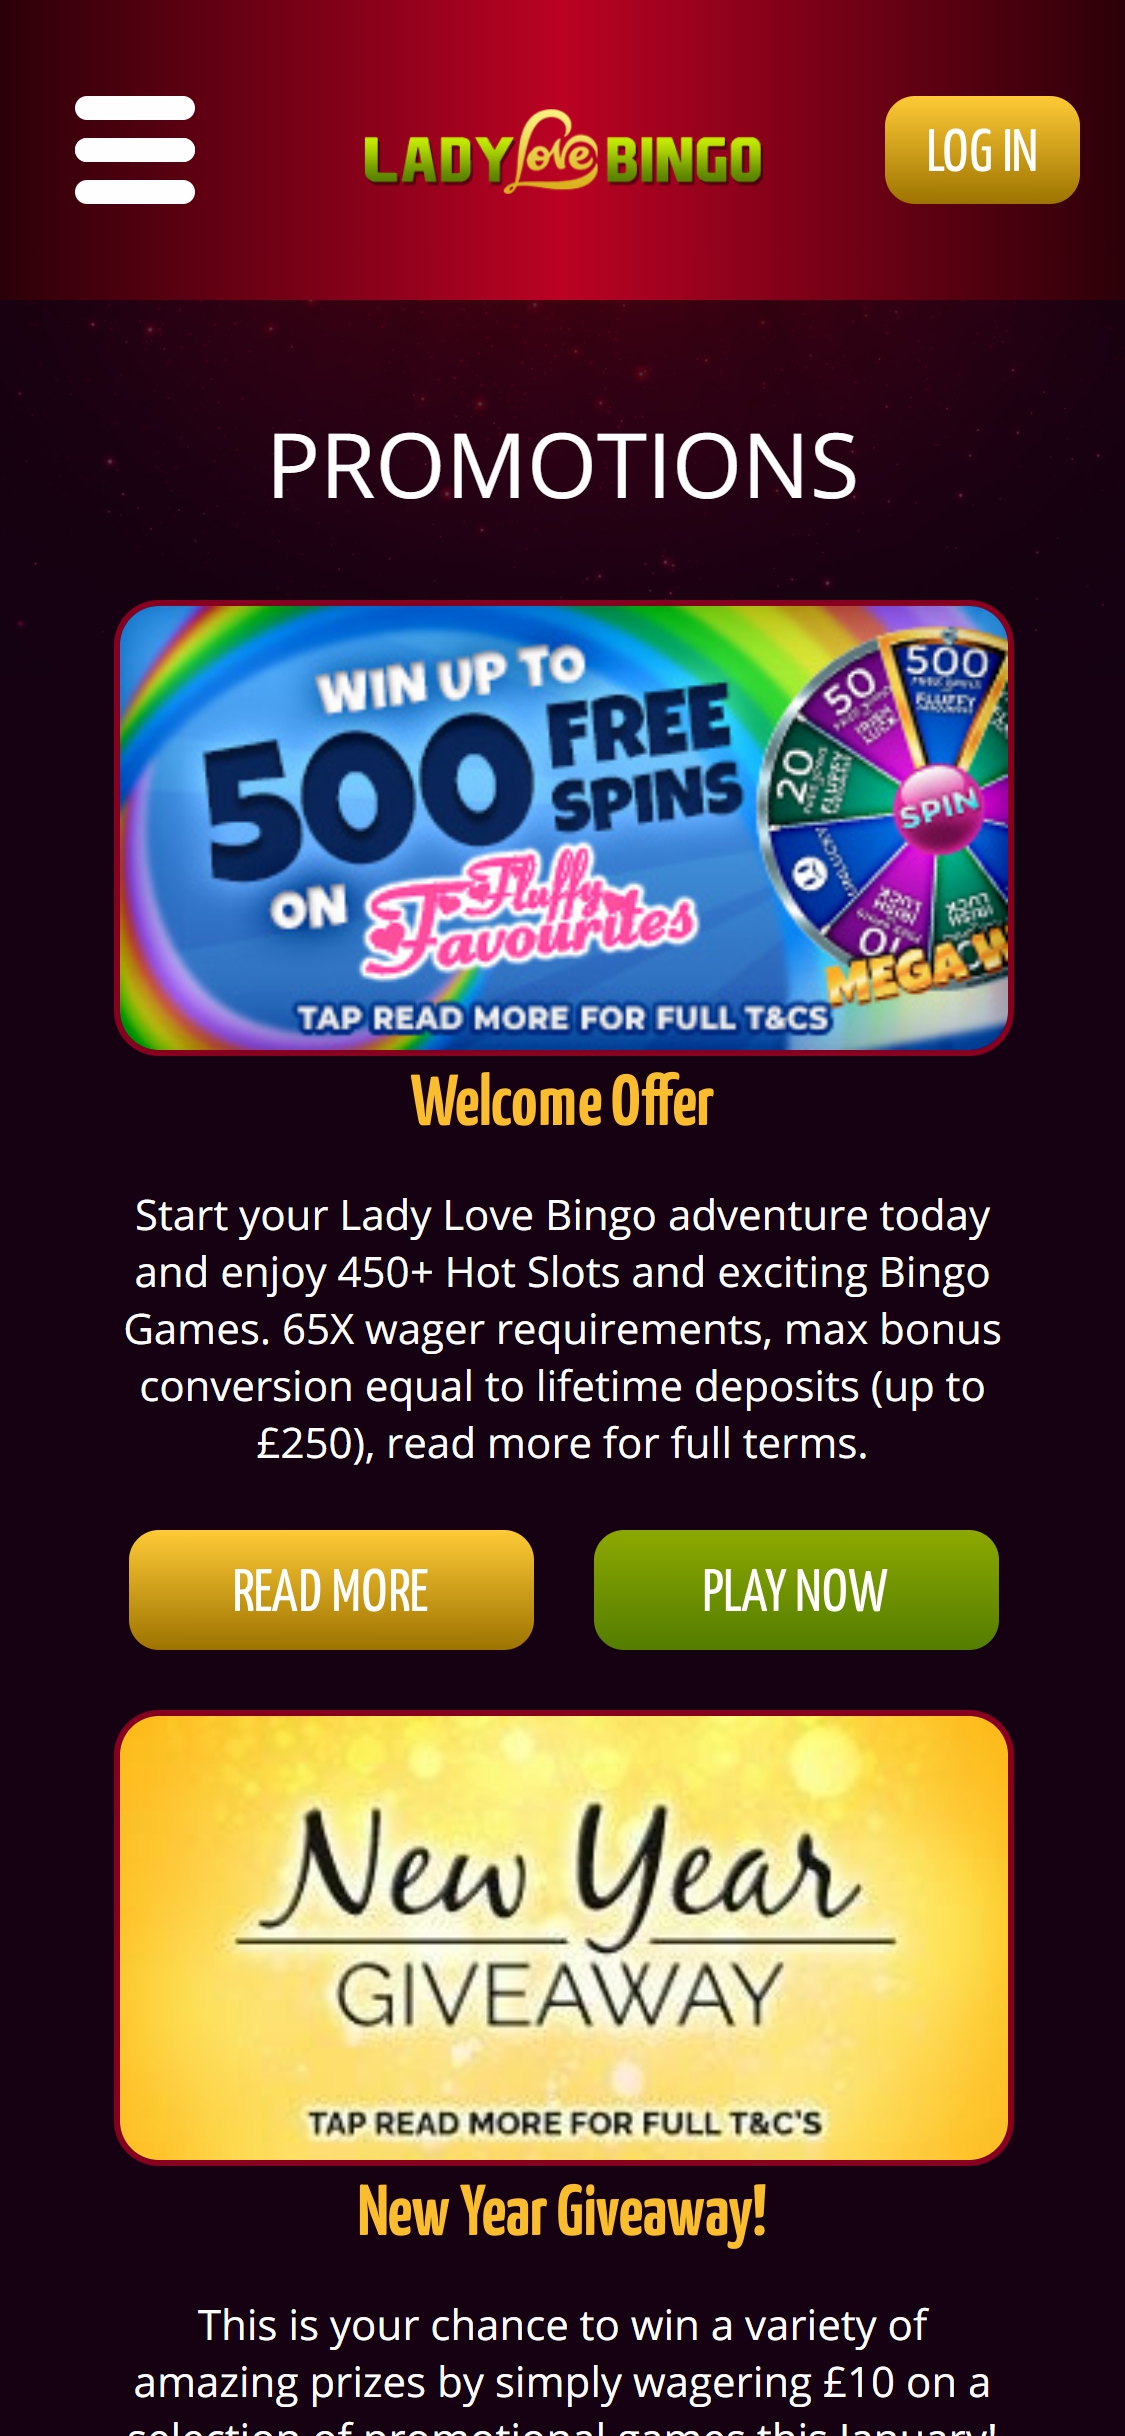 Lady love Bingo Casino Mobile No Deposit Bonus Review